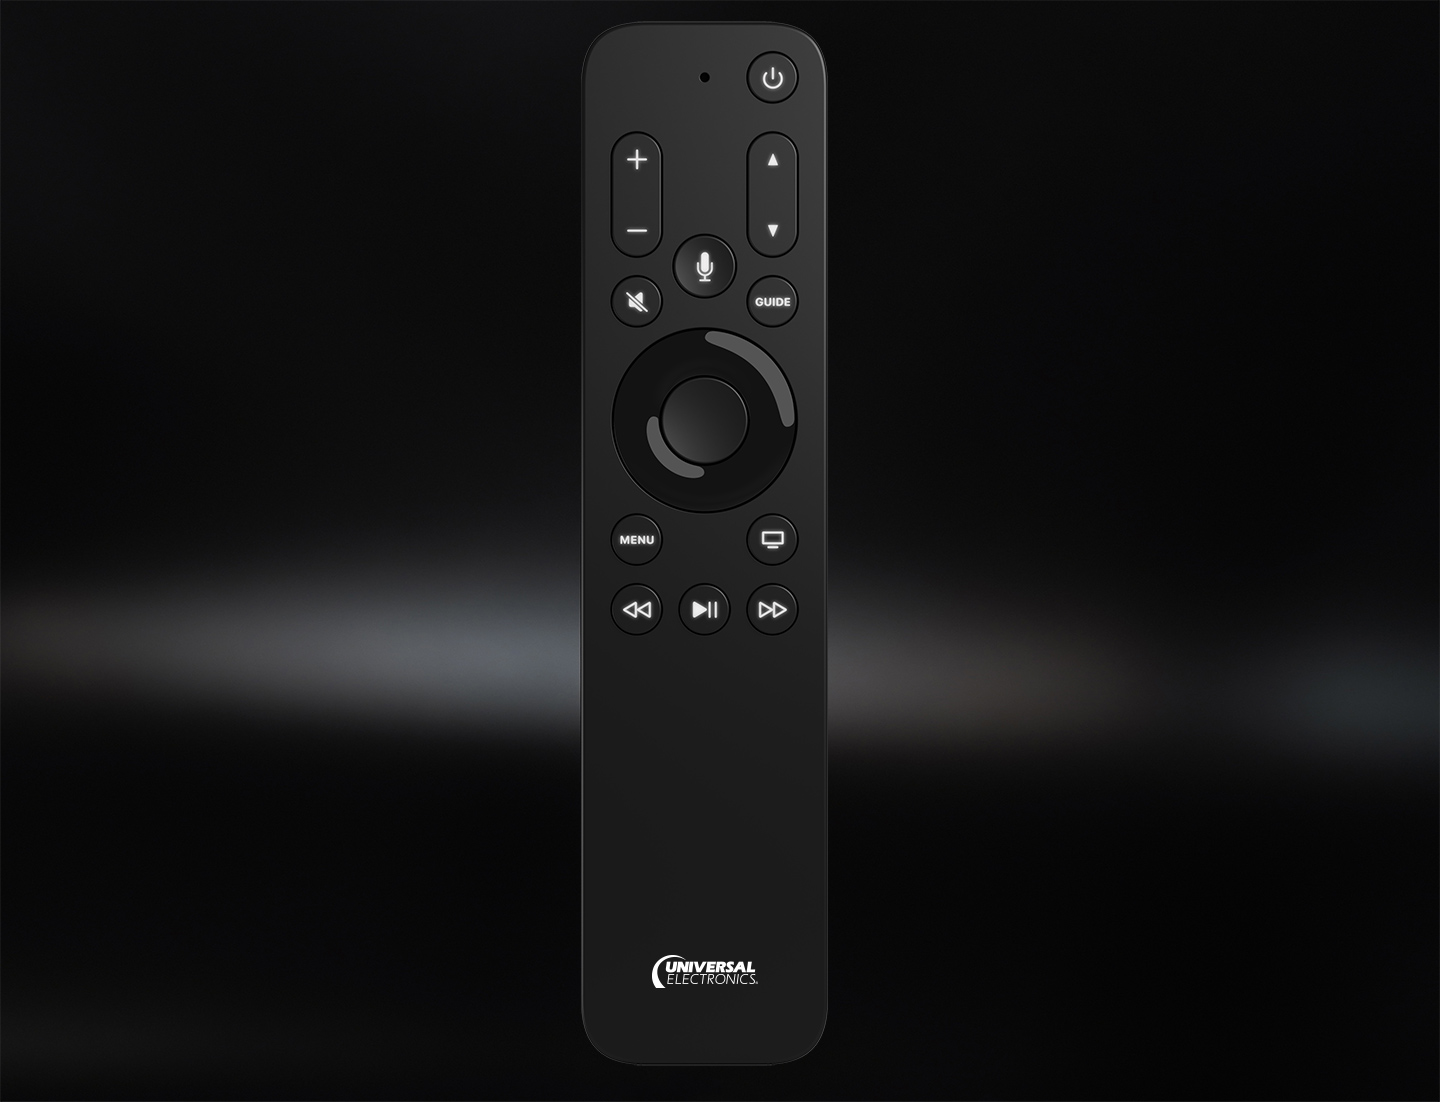 Universal Electronics Apple TV remote